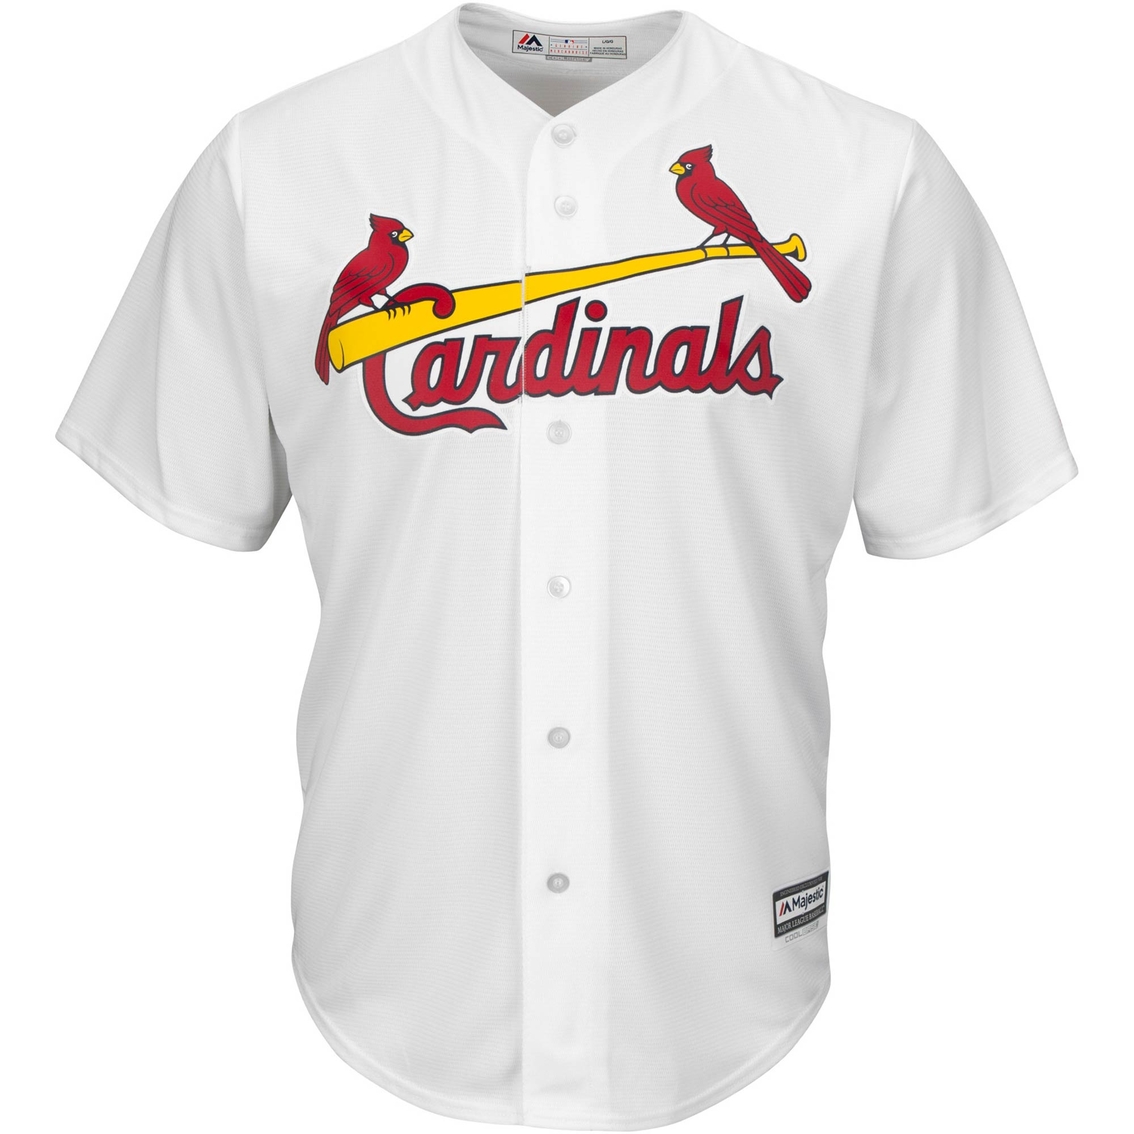 st louis cardinals replica jersey